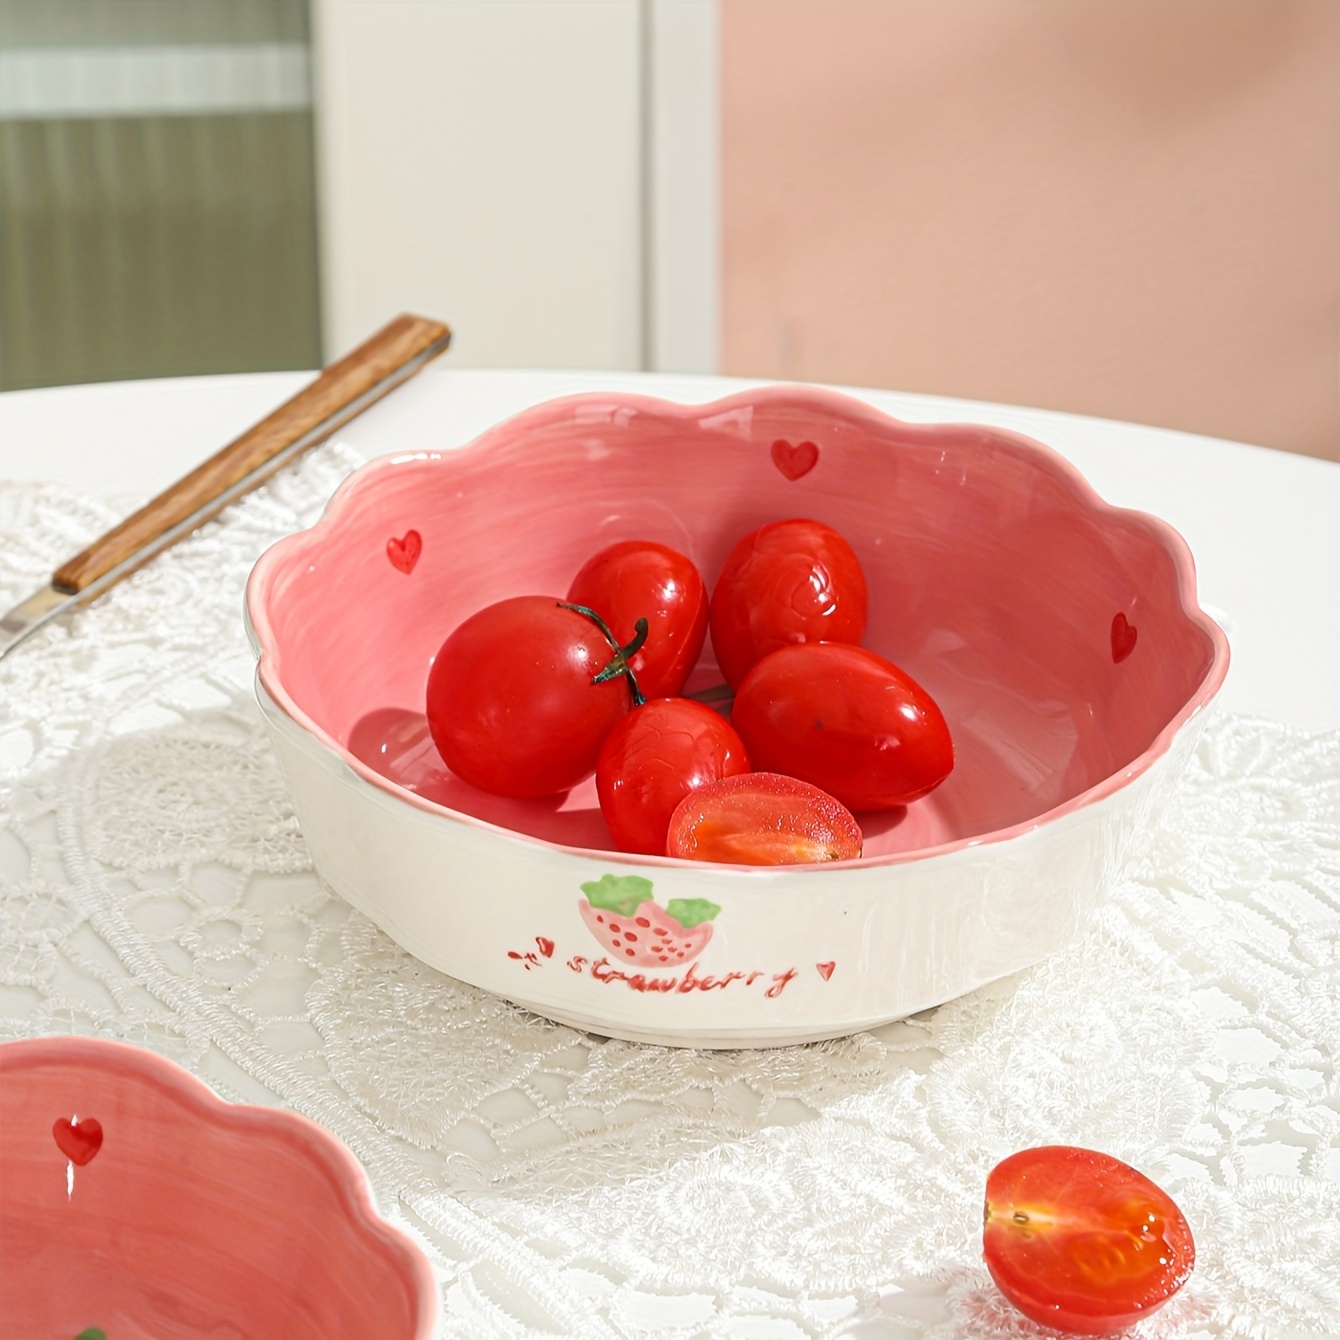 

1pc Ceramic Plate, Pink Cute Ceramic Plate, Strawberry Dinner Plate, Salad Plate, Dessert Plate, For Home Dorm Kitchen Restaurant, Tableware Accessories, Kitchen Supplies